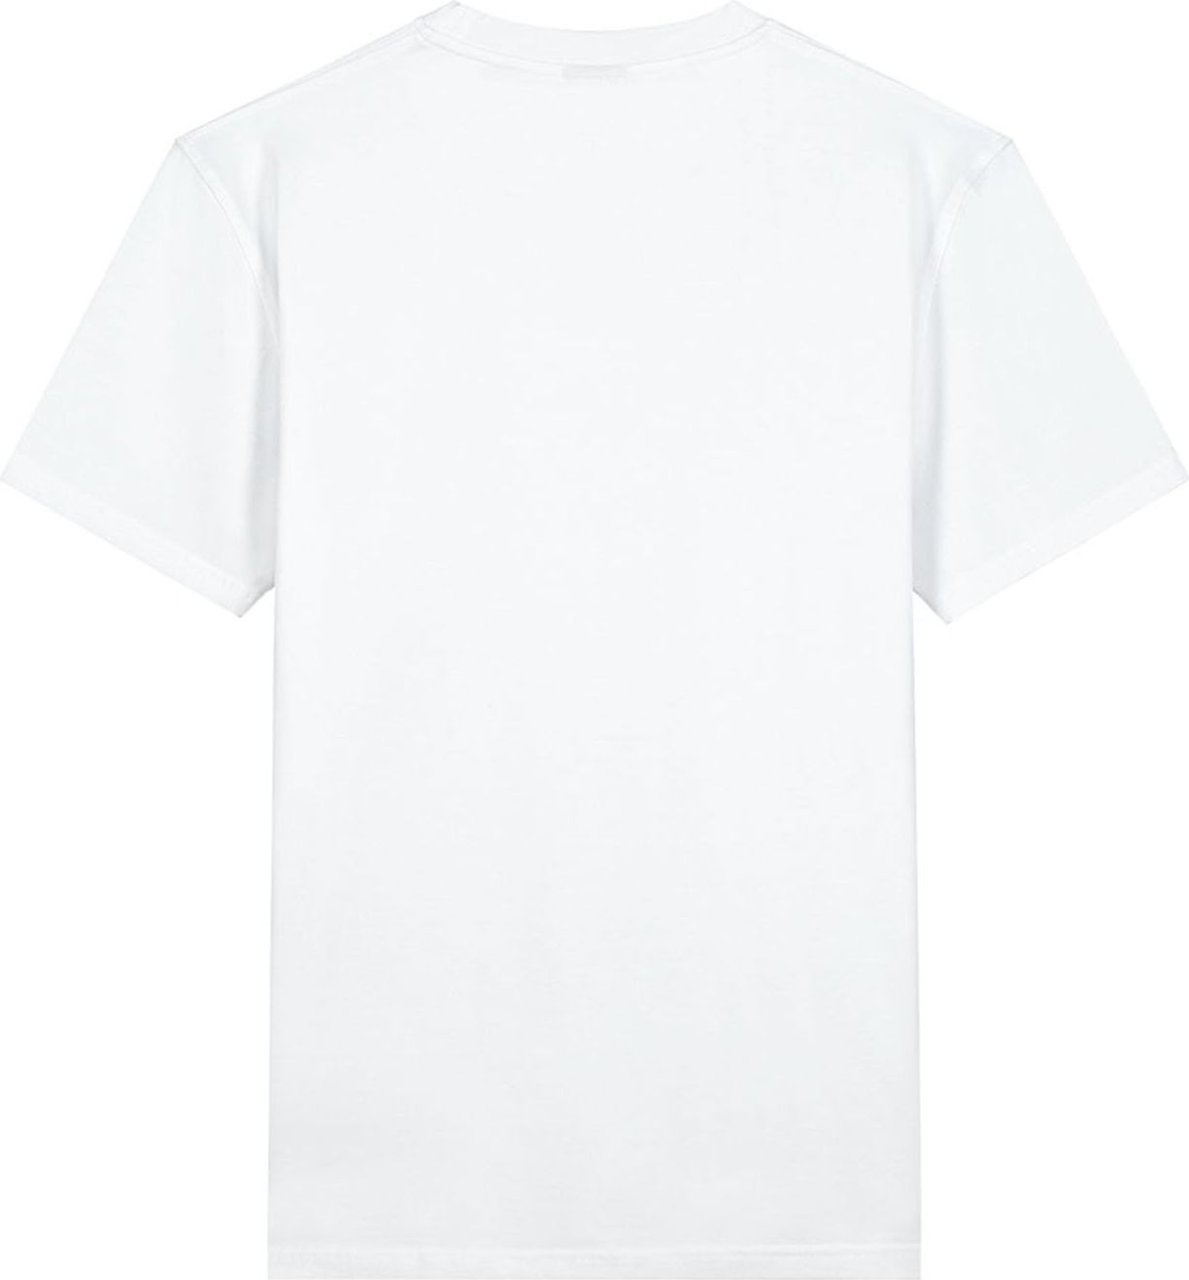 Malelions Regular Basic T-Shirt - White/Black Wit